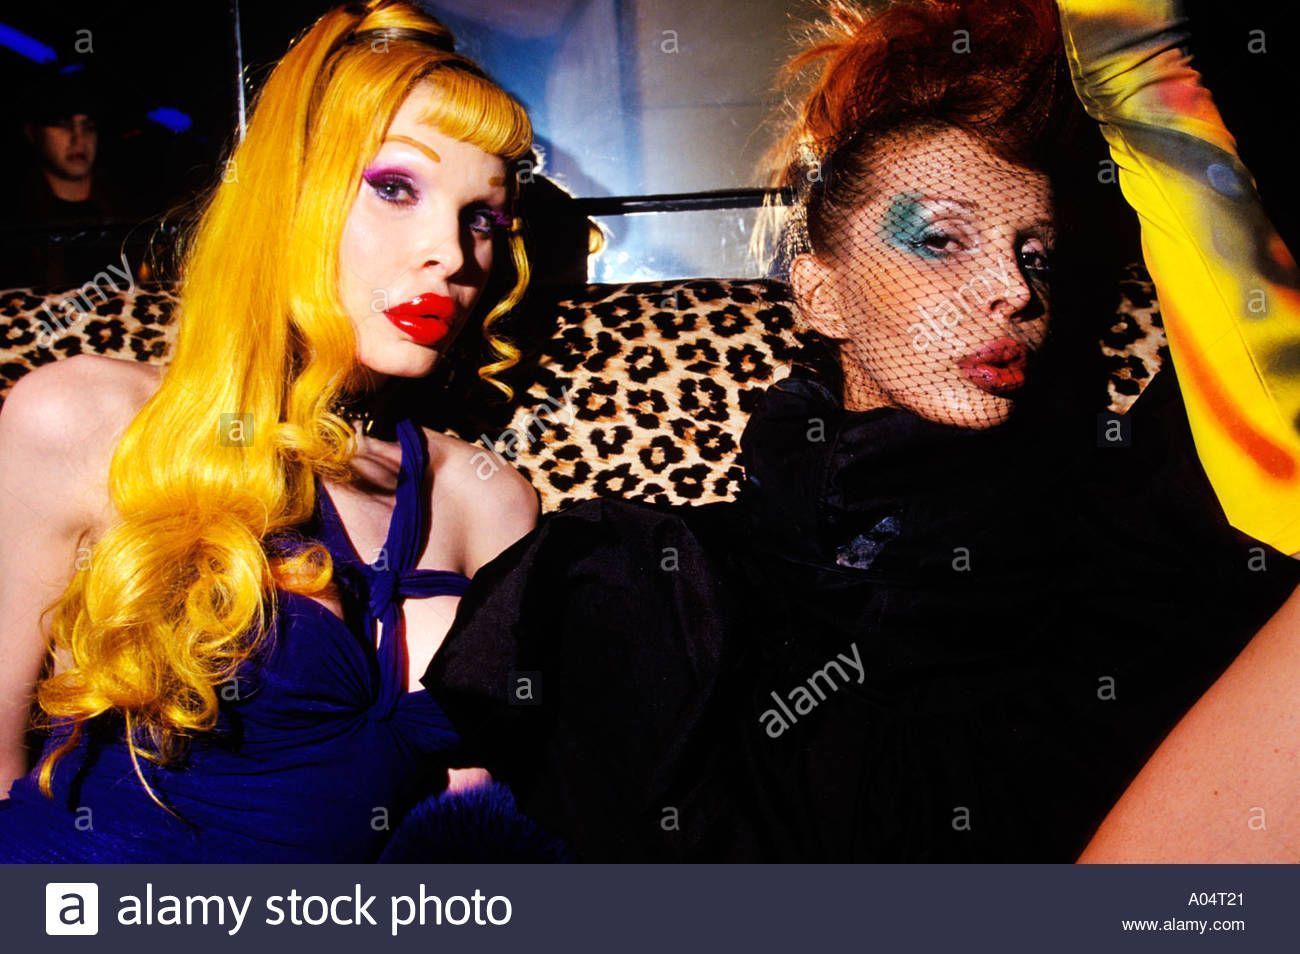 Nyc clubs saturday night transvestites